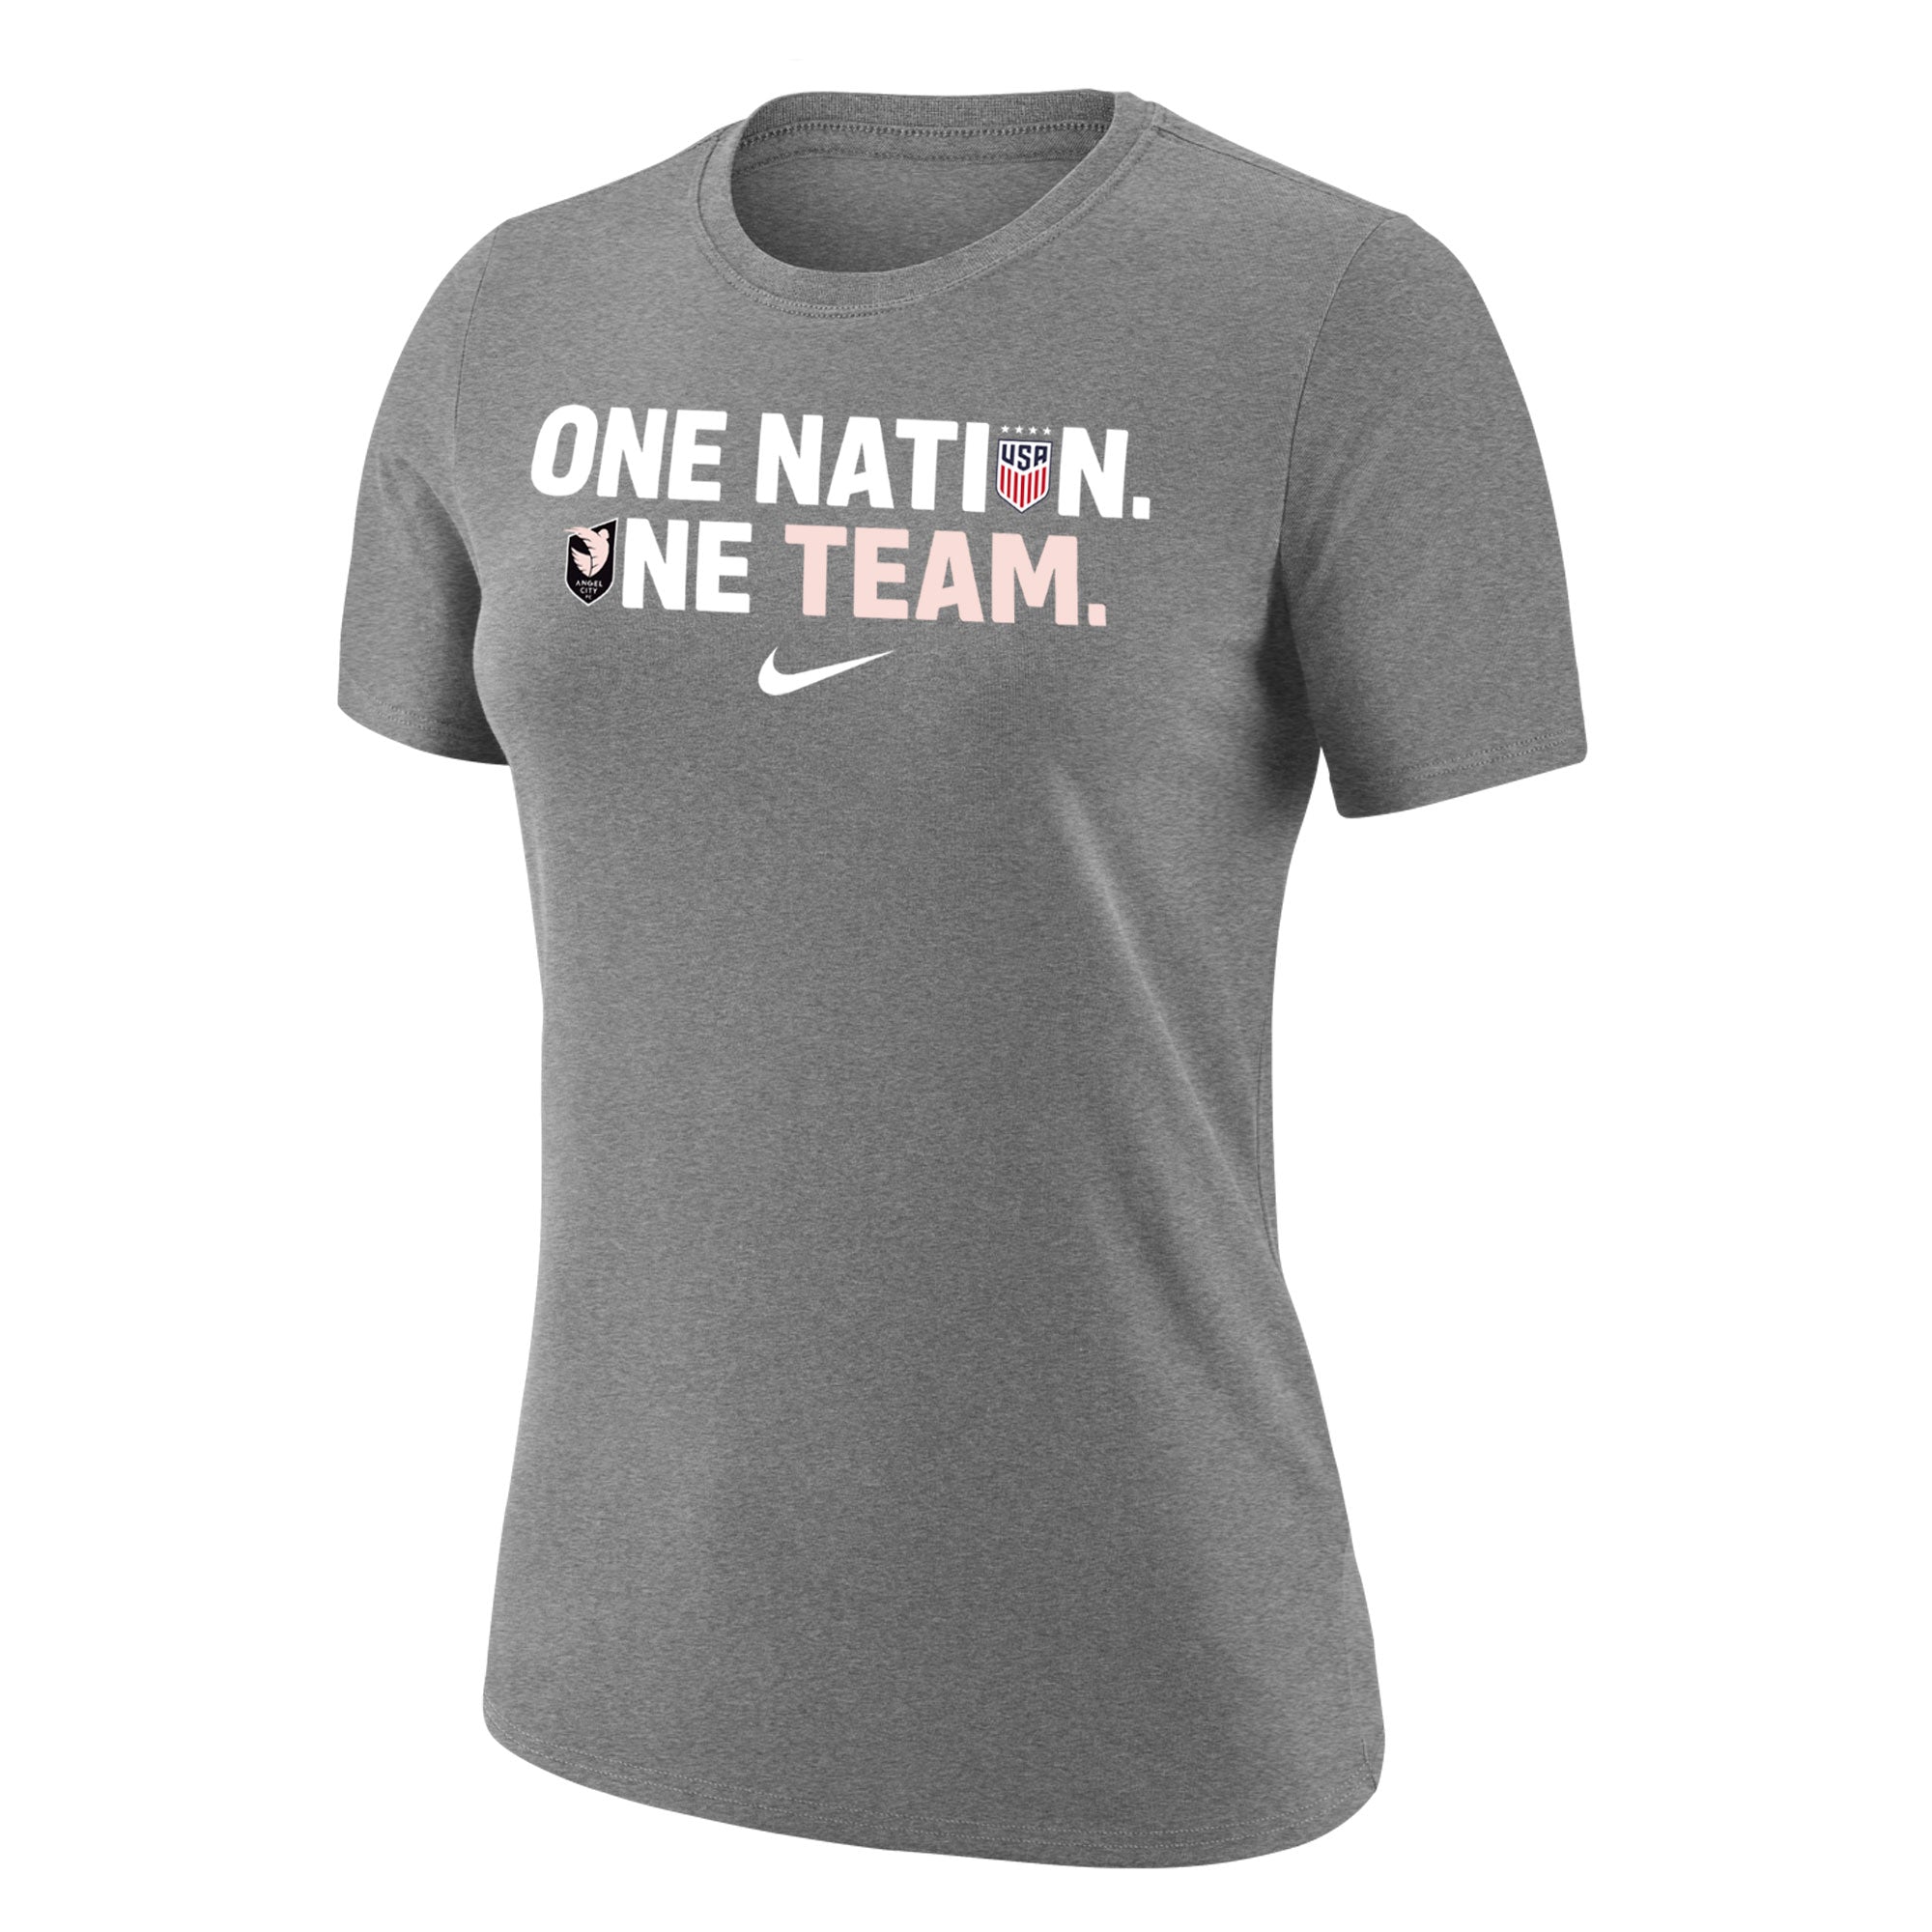 Angel City FC x USWNT Nike Women's One Team One Nation T-Shirt